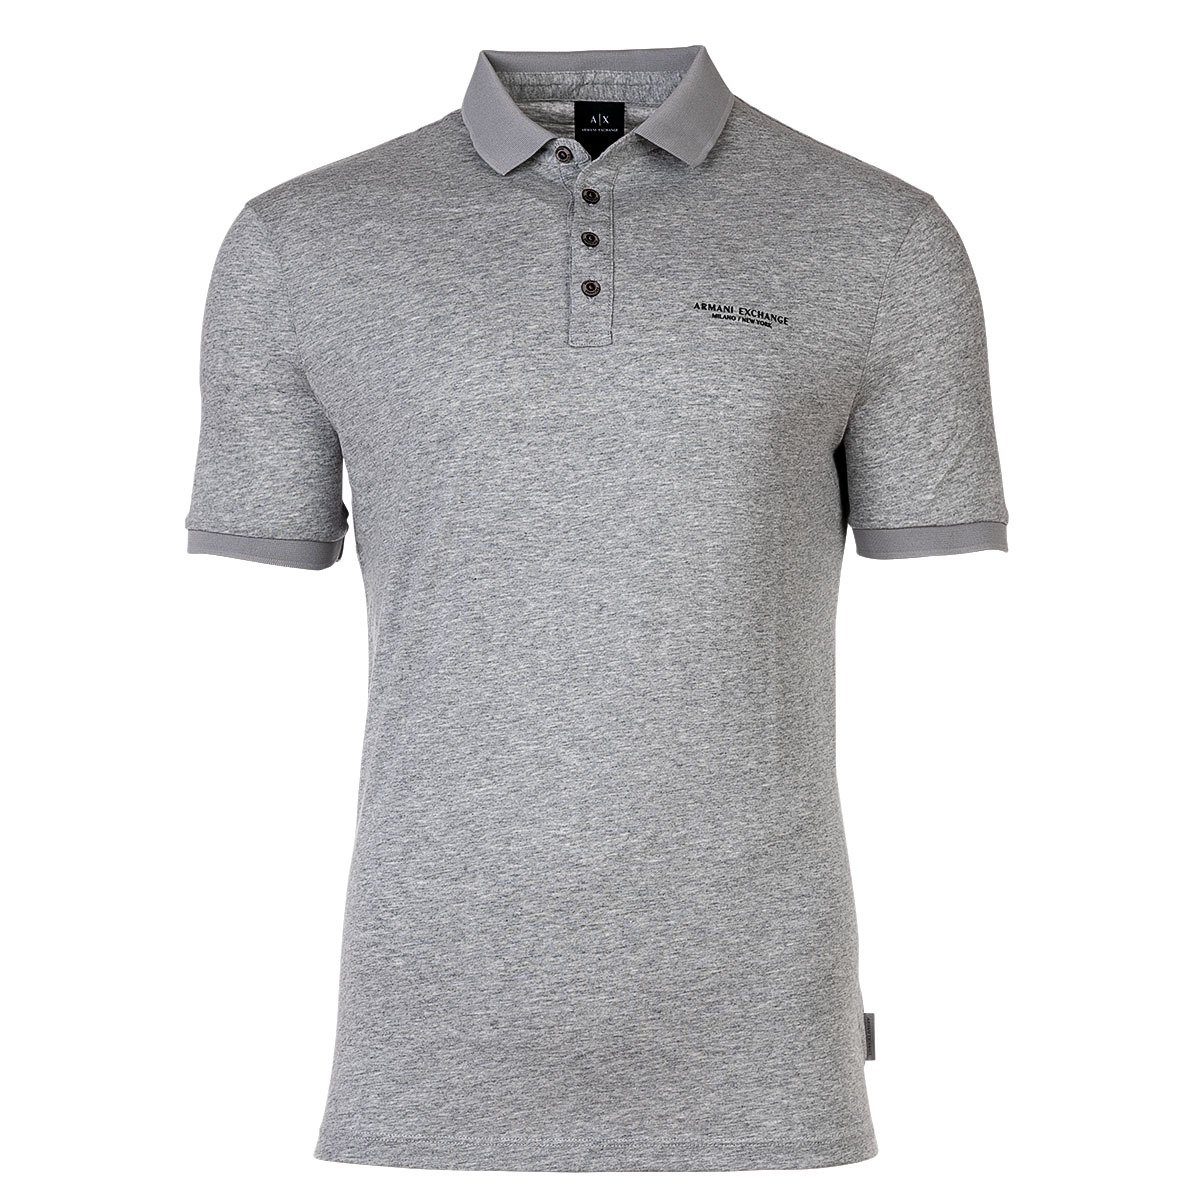 ARMANI EXCHANGE Poloshirt Herren Poloshirt - Schriftzug, Slim fit, Cotton Grau